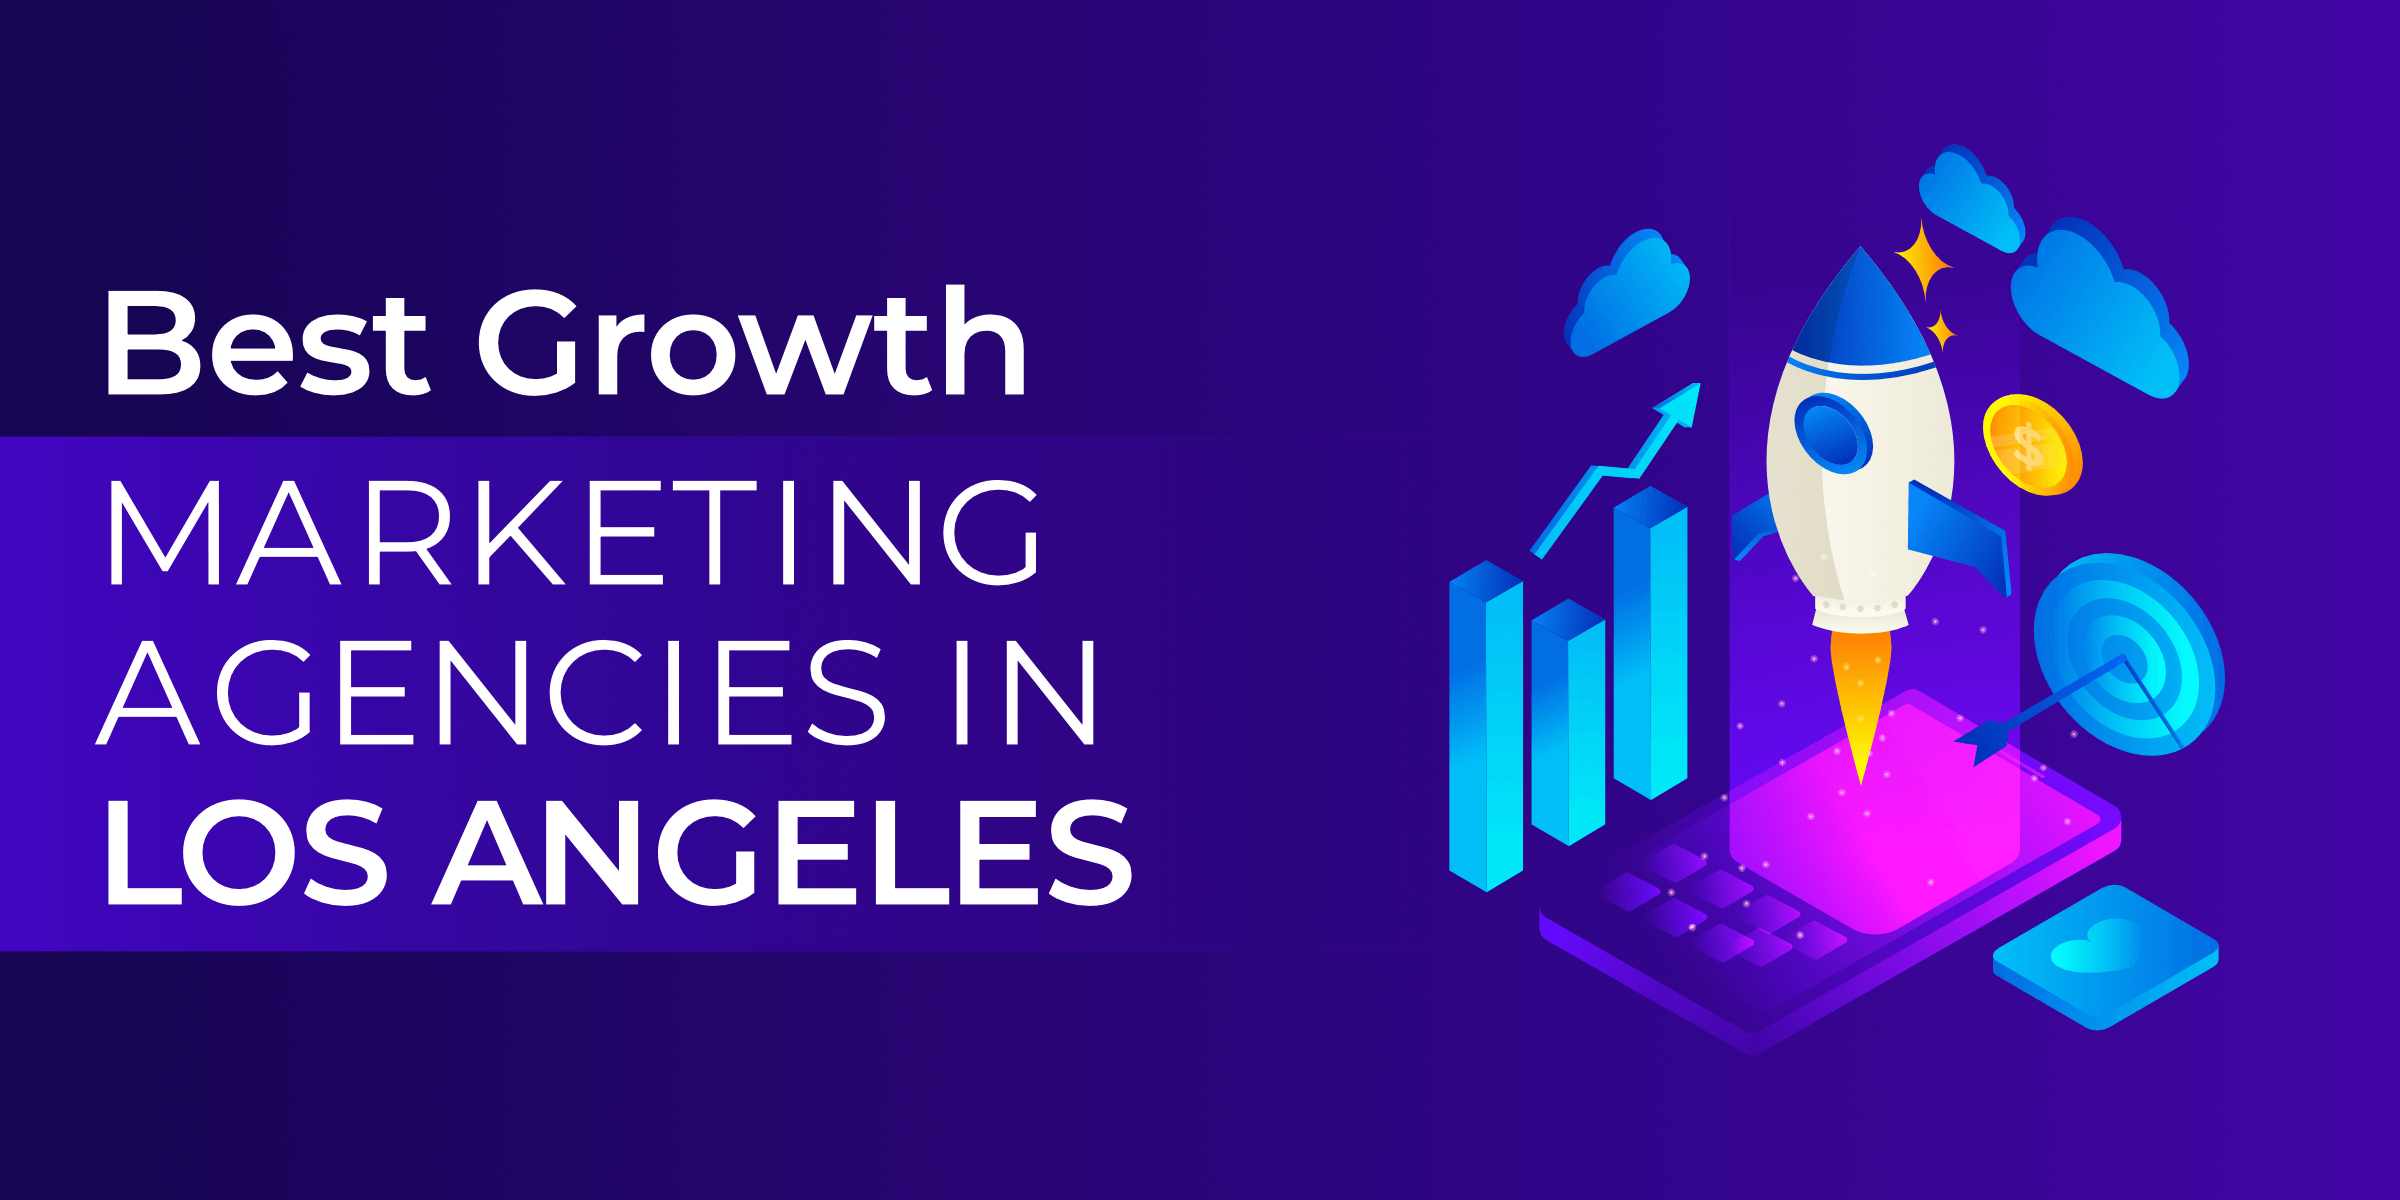 Best Growth Marketing Agencies in Los Angeles